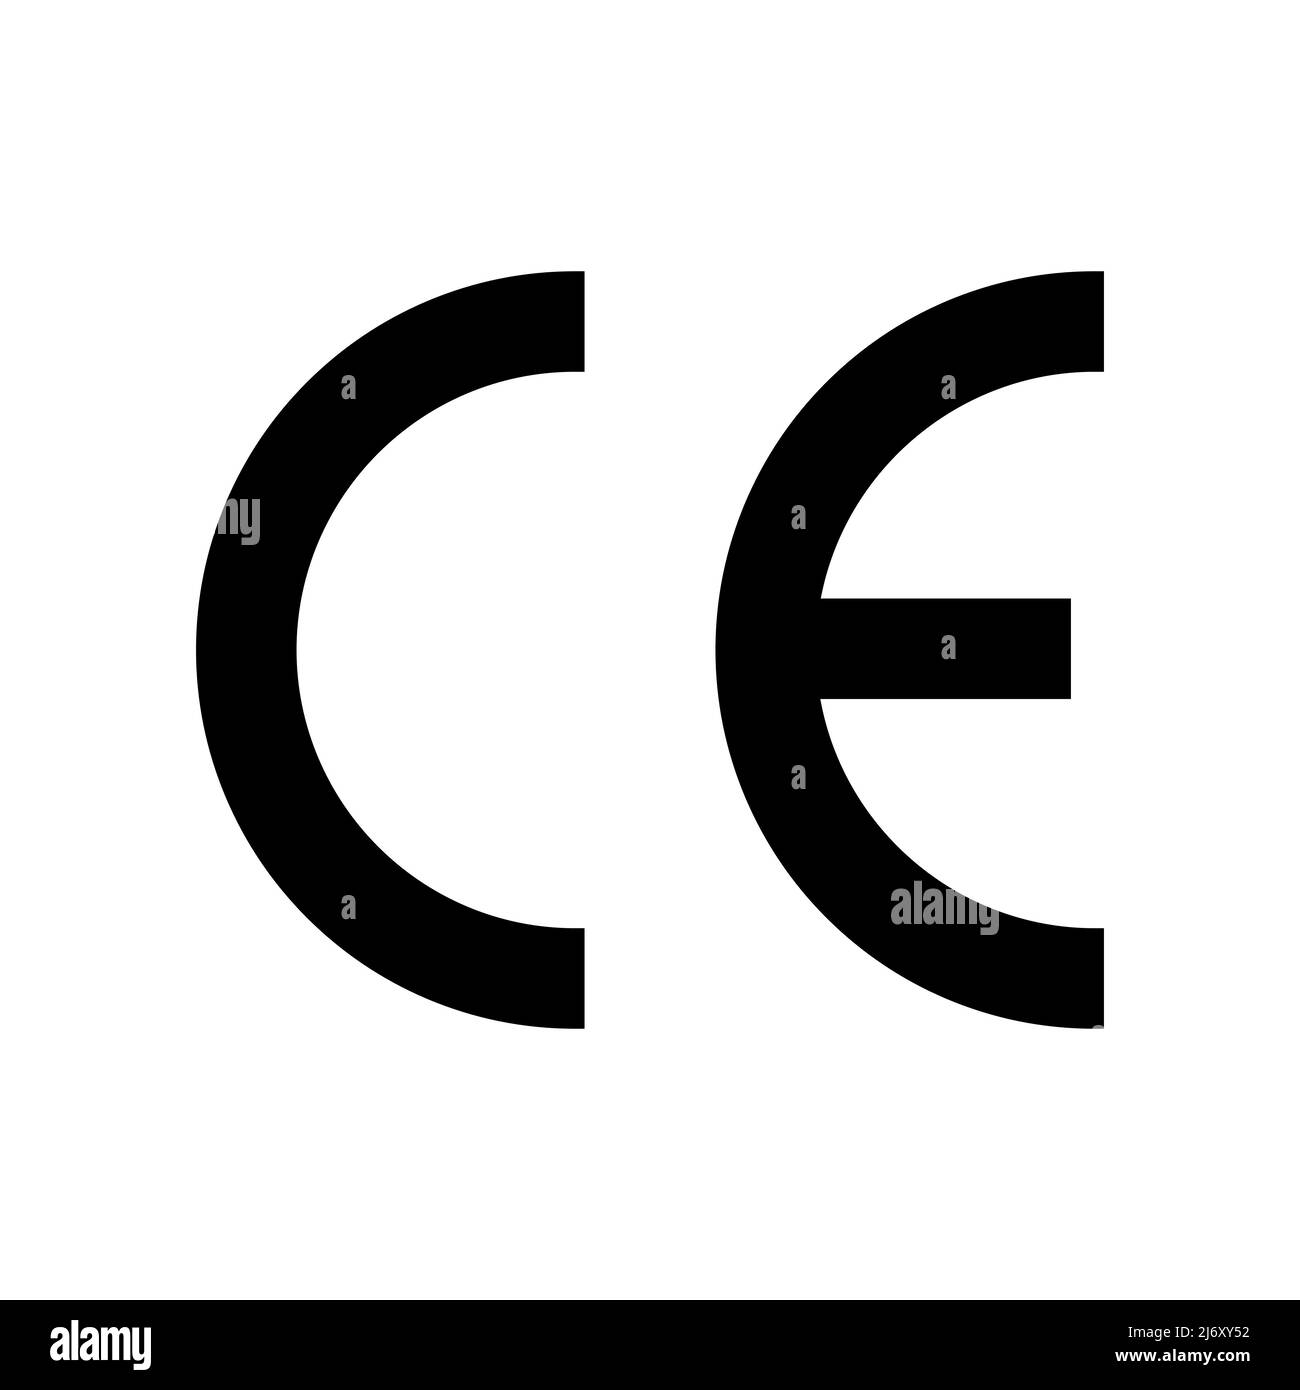 CE mark symbol. CE symbol isolated on white background. Black vector icon. European conformity certification mark. Stock Vector